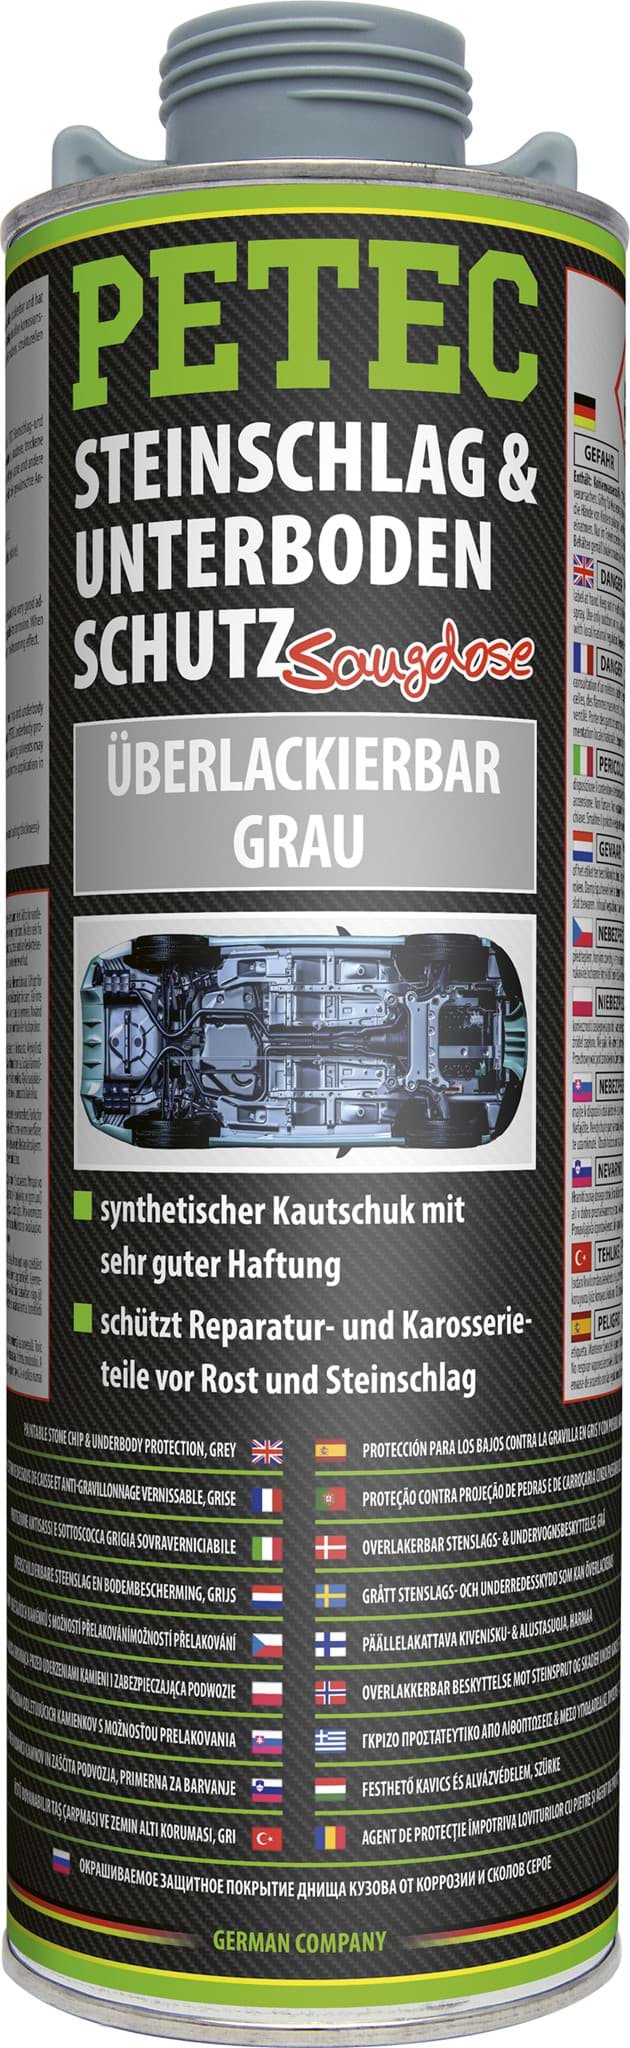 Petec Unterbodenschutz UBS grau überlackierbar 1L 73310 resmi